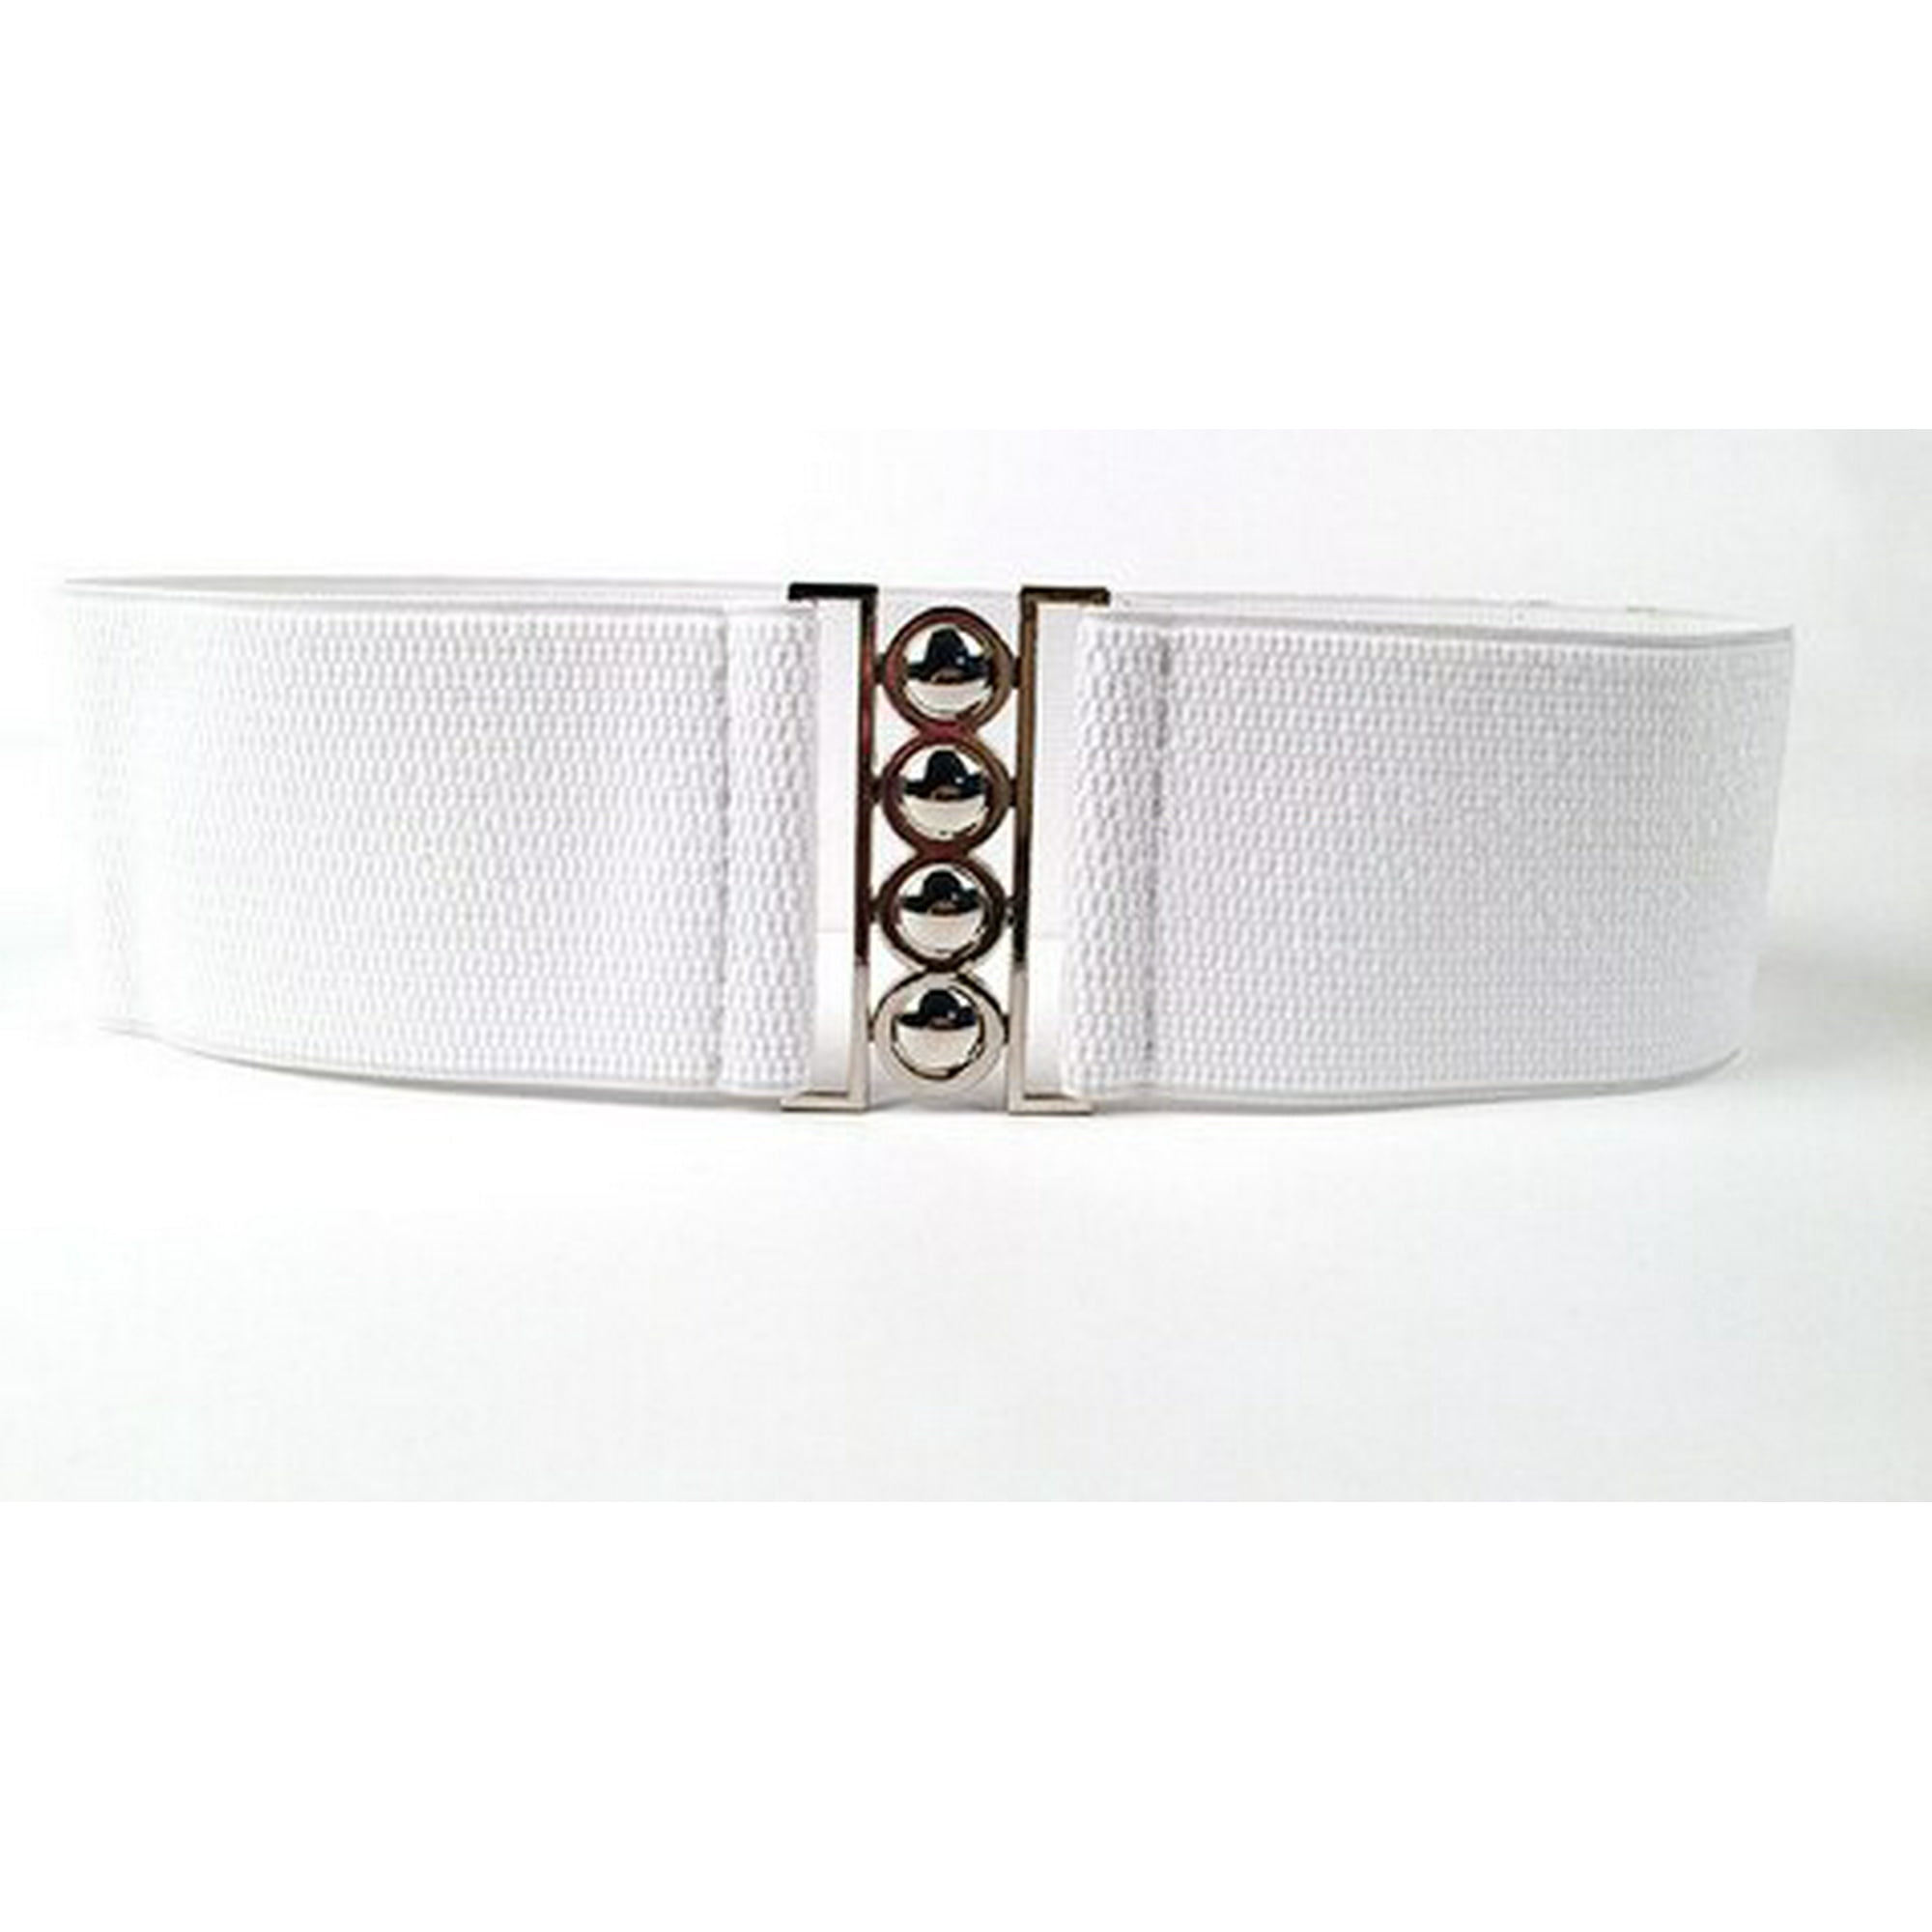 luxury designer belts